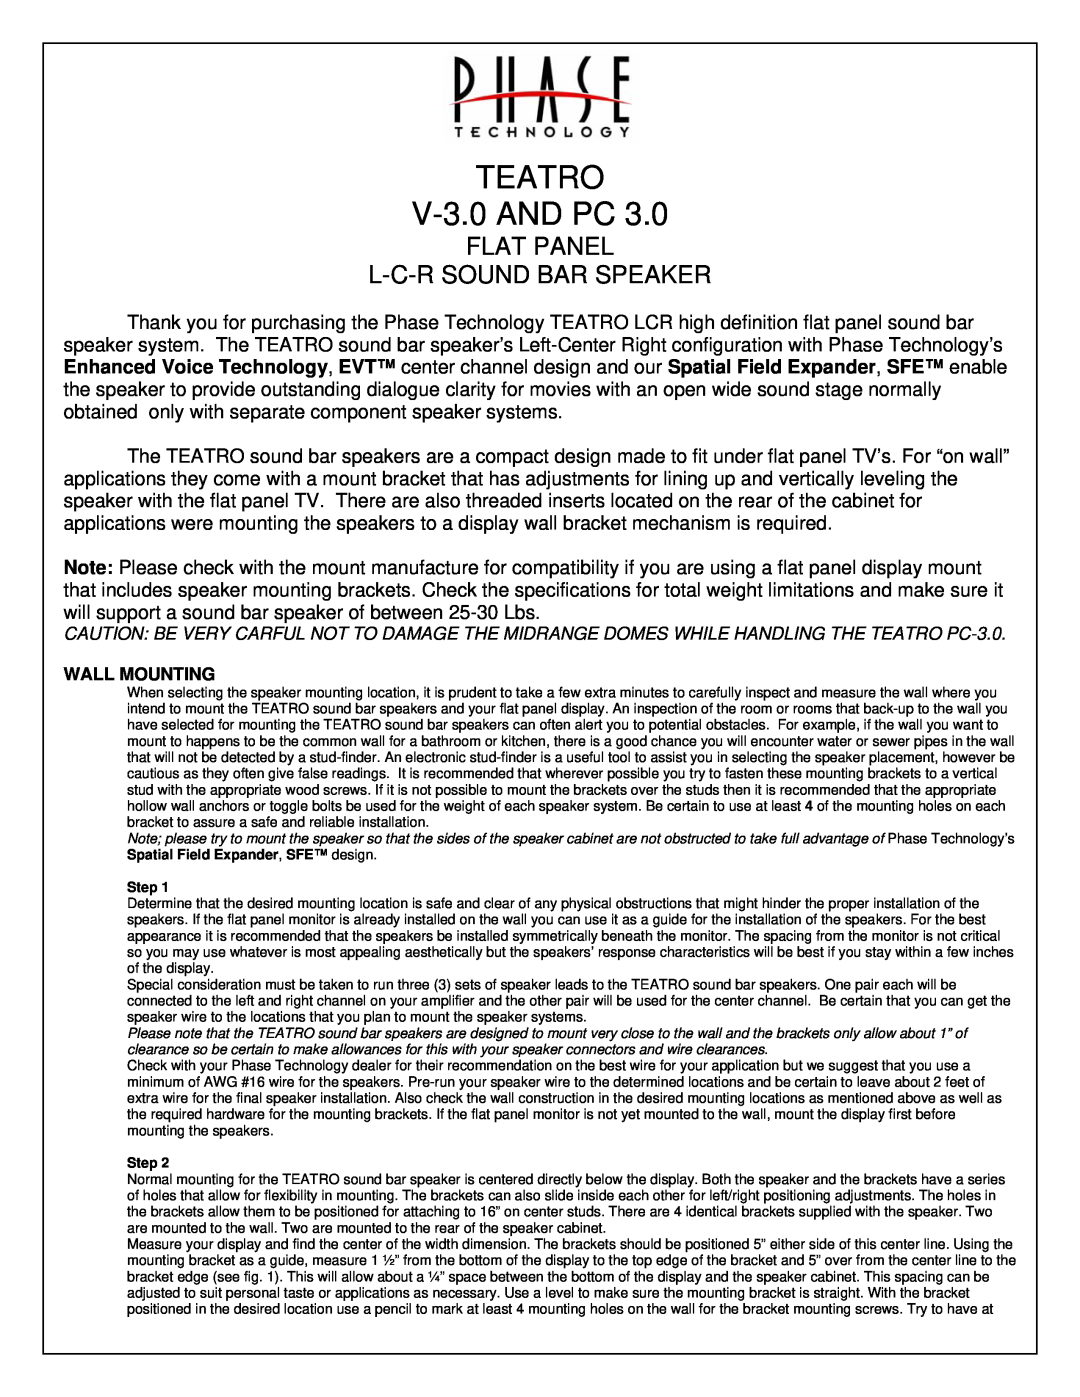 Phase Technology PC-3.0 manual TEATRO V-3.0AND PC, Flat Panel L-C-Rsound Bar Speaker 